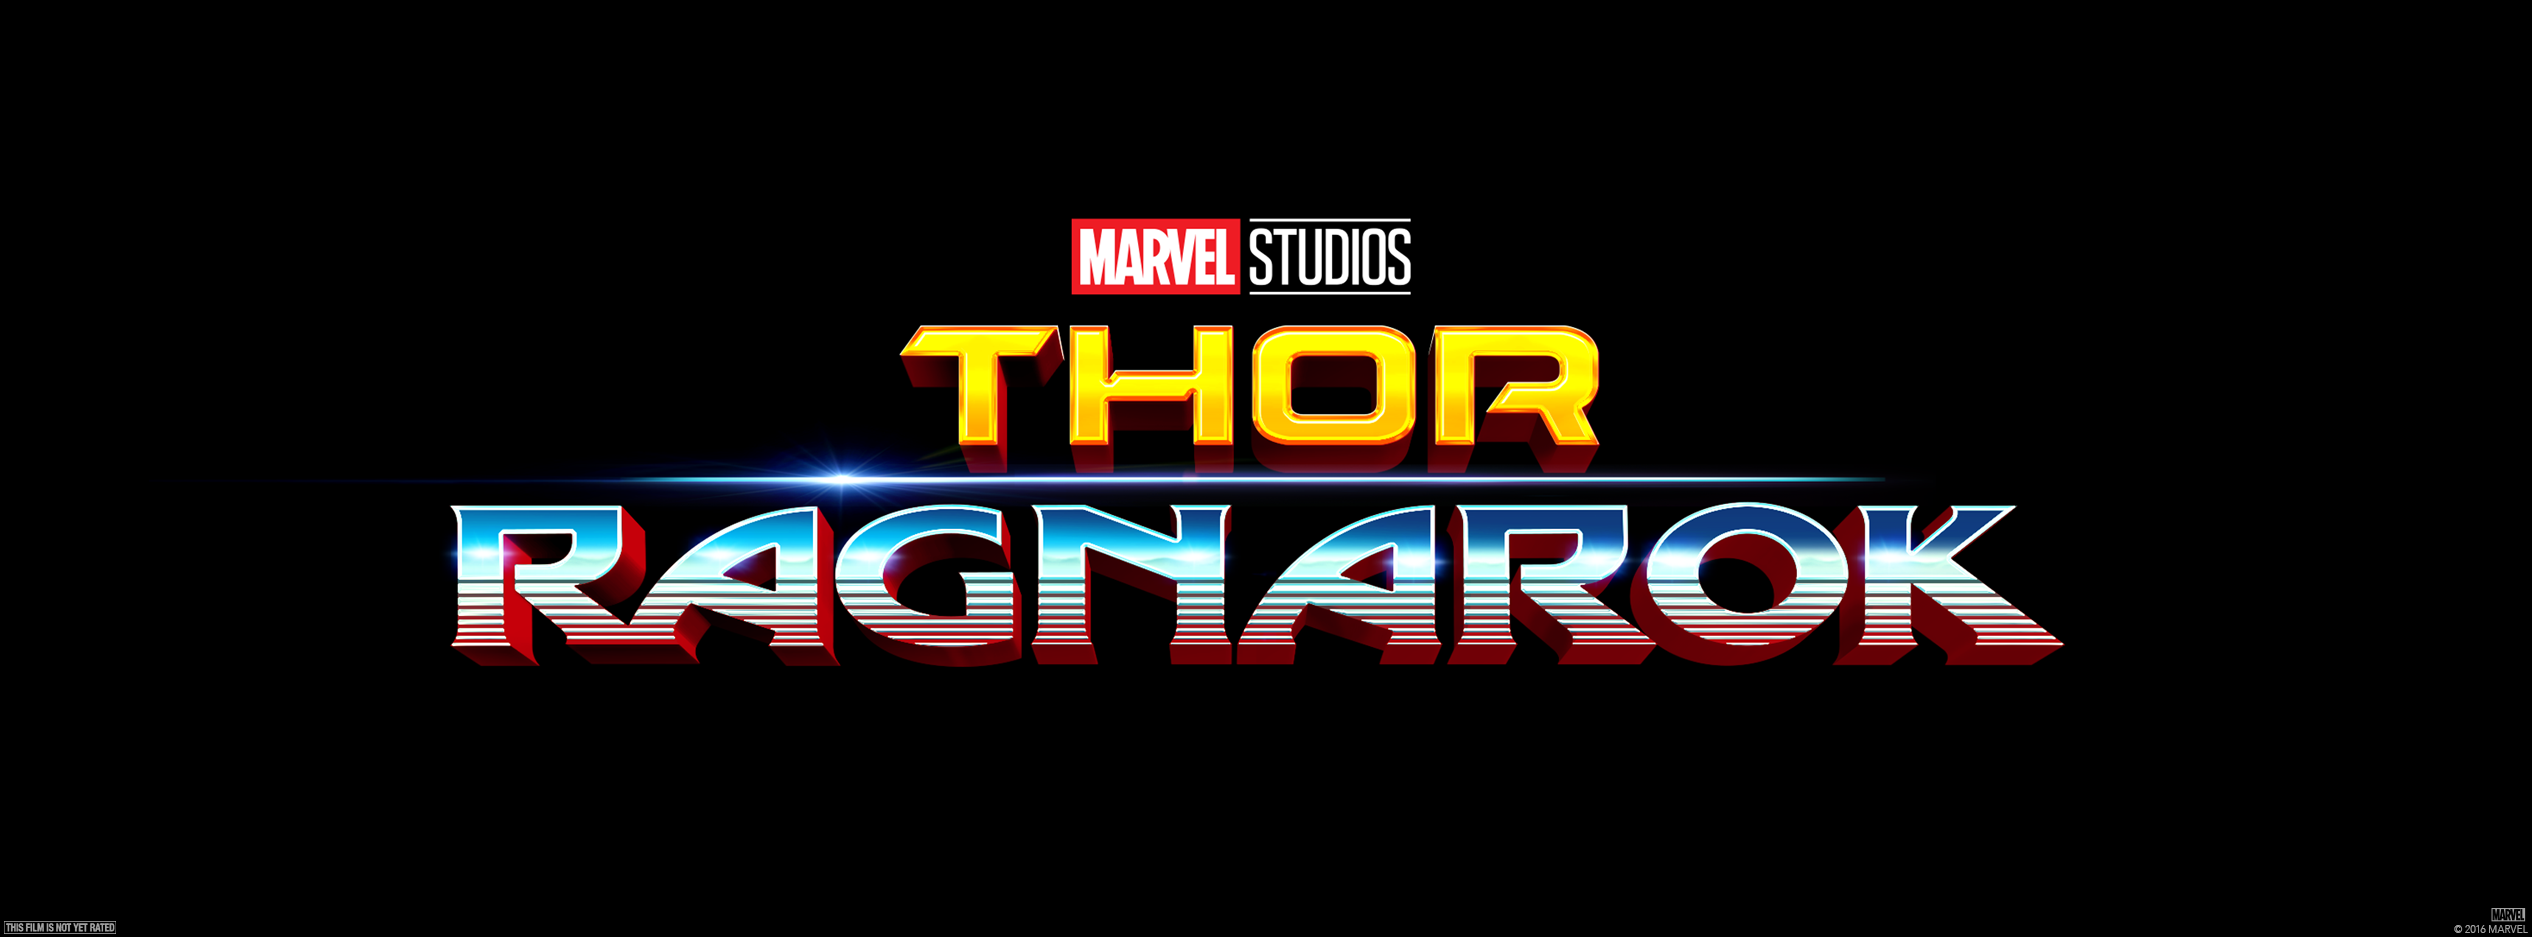 Thor: Ragnarok Teaser Trailer, Movie Poster and Images #ThorRagnarok 1